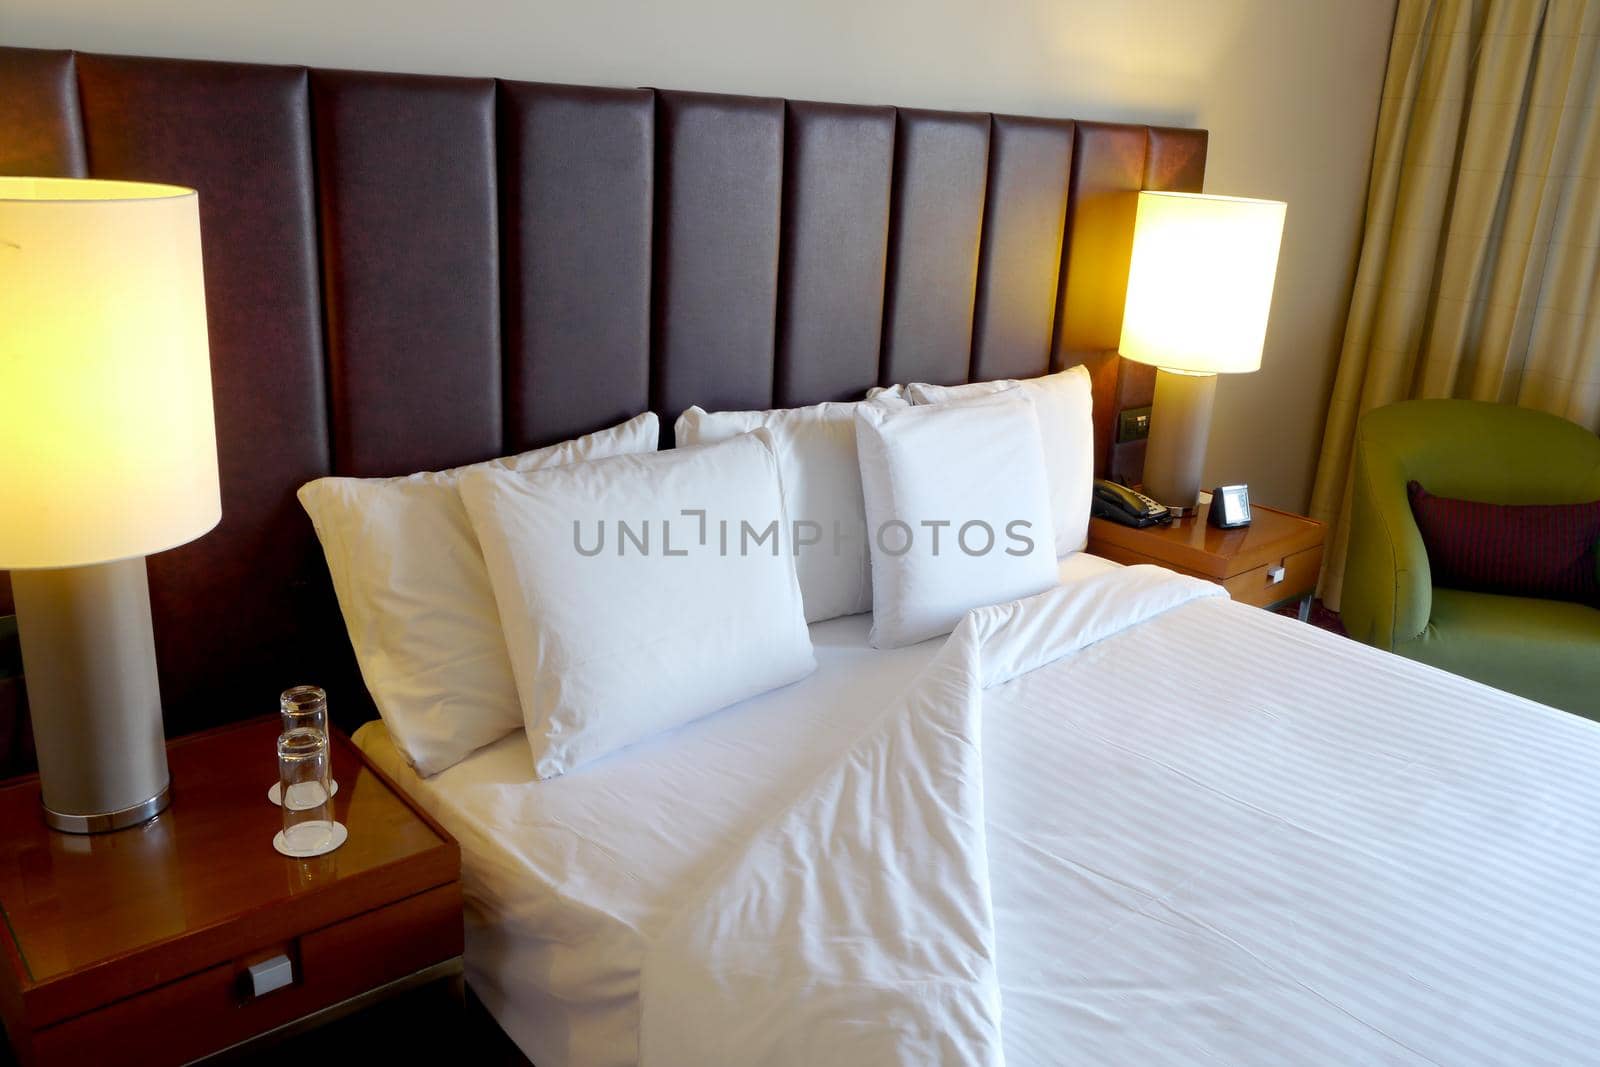 Luxury hotel bedroom with white linen